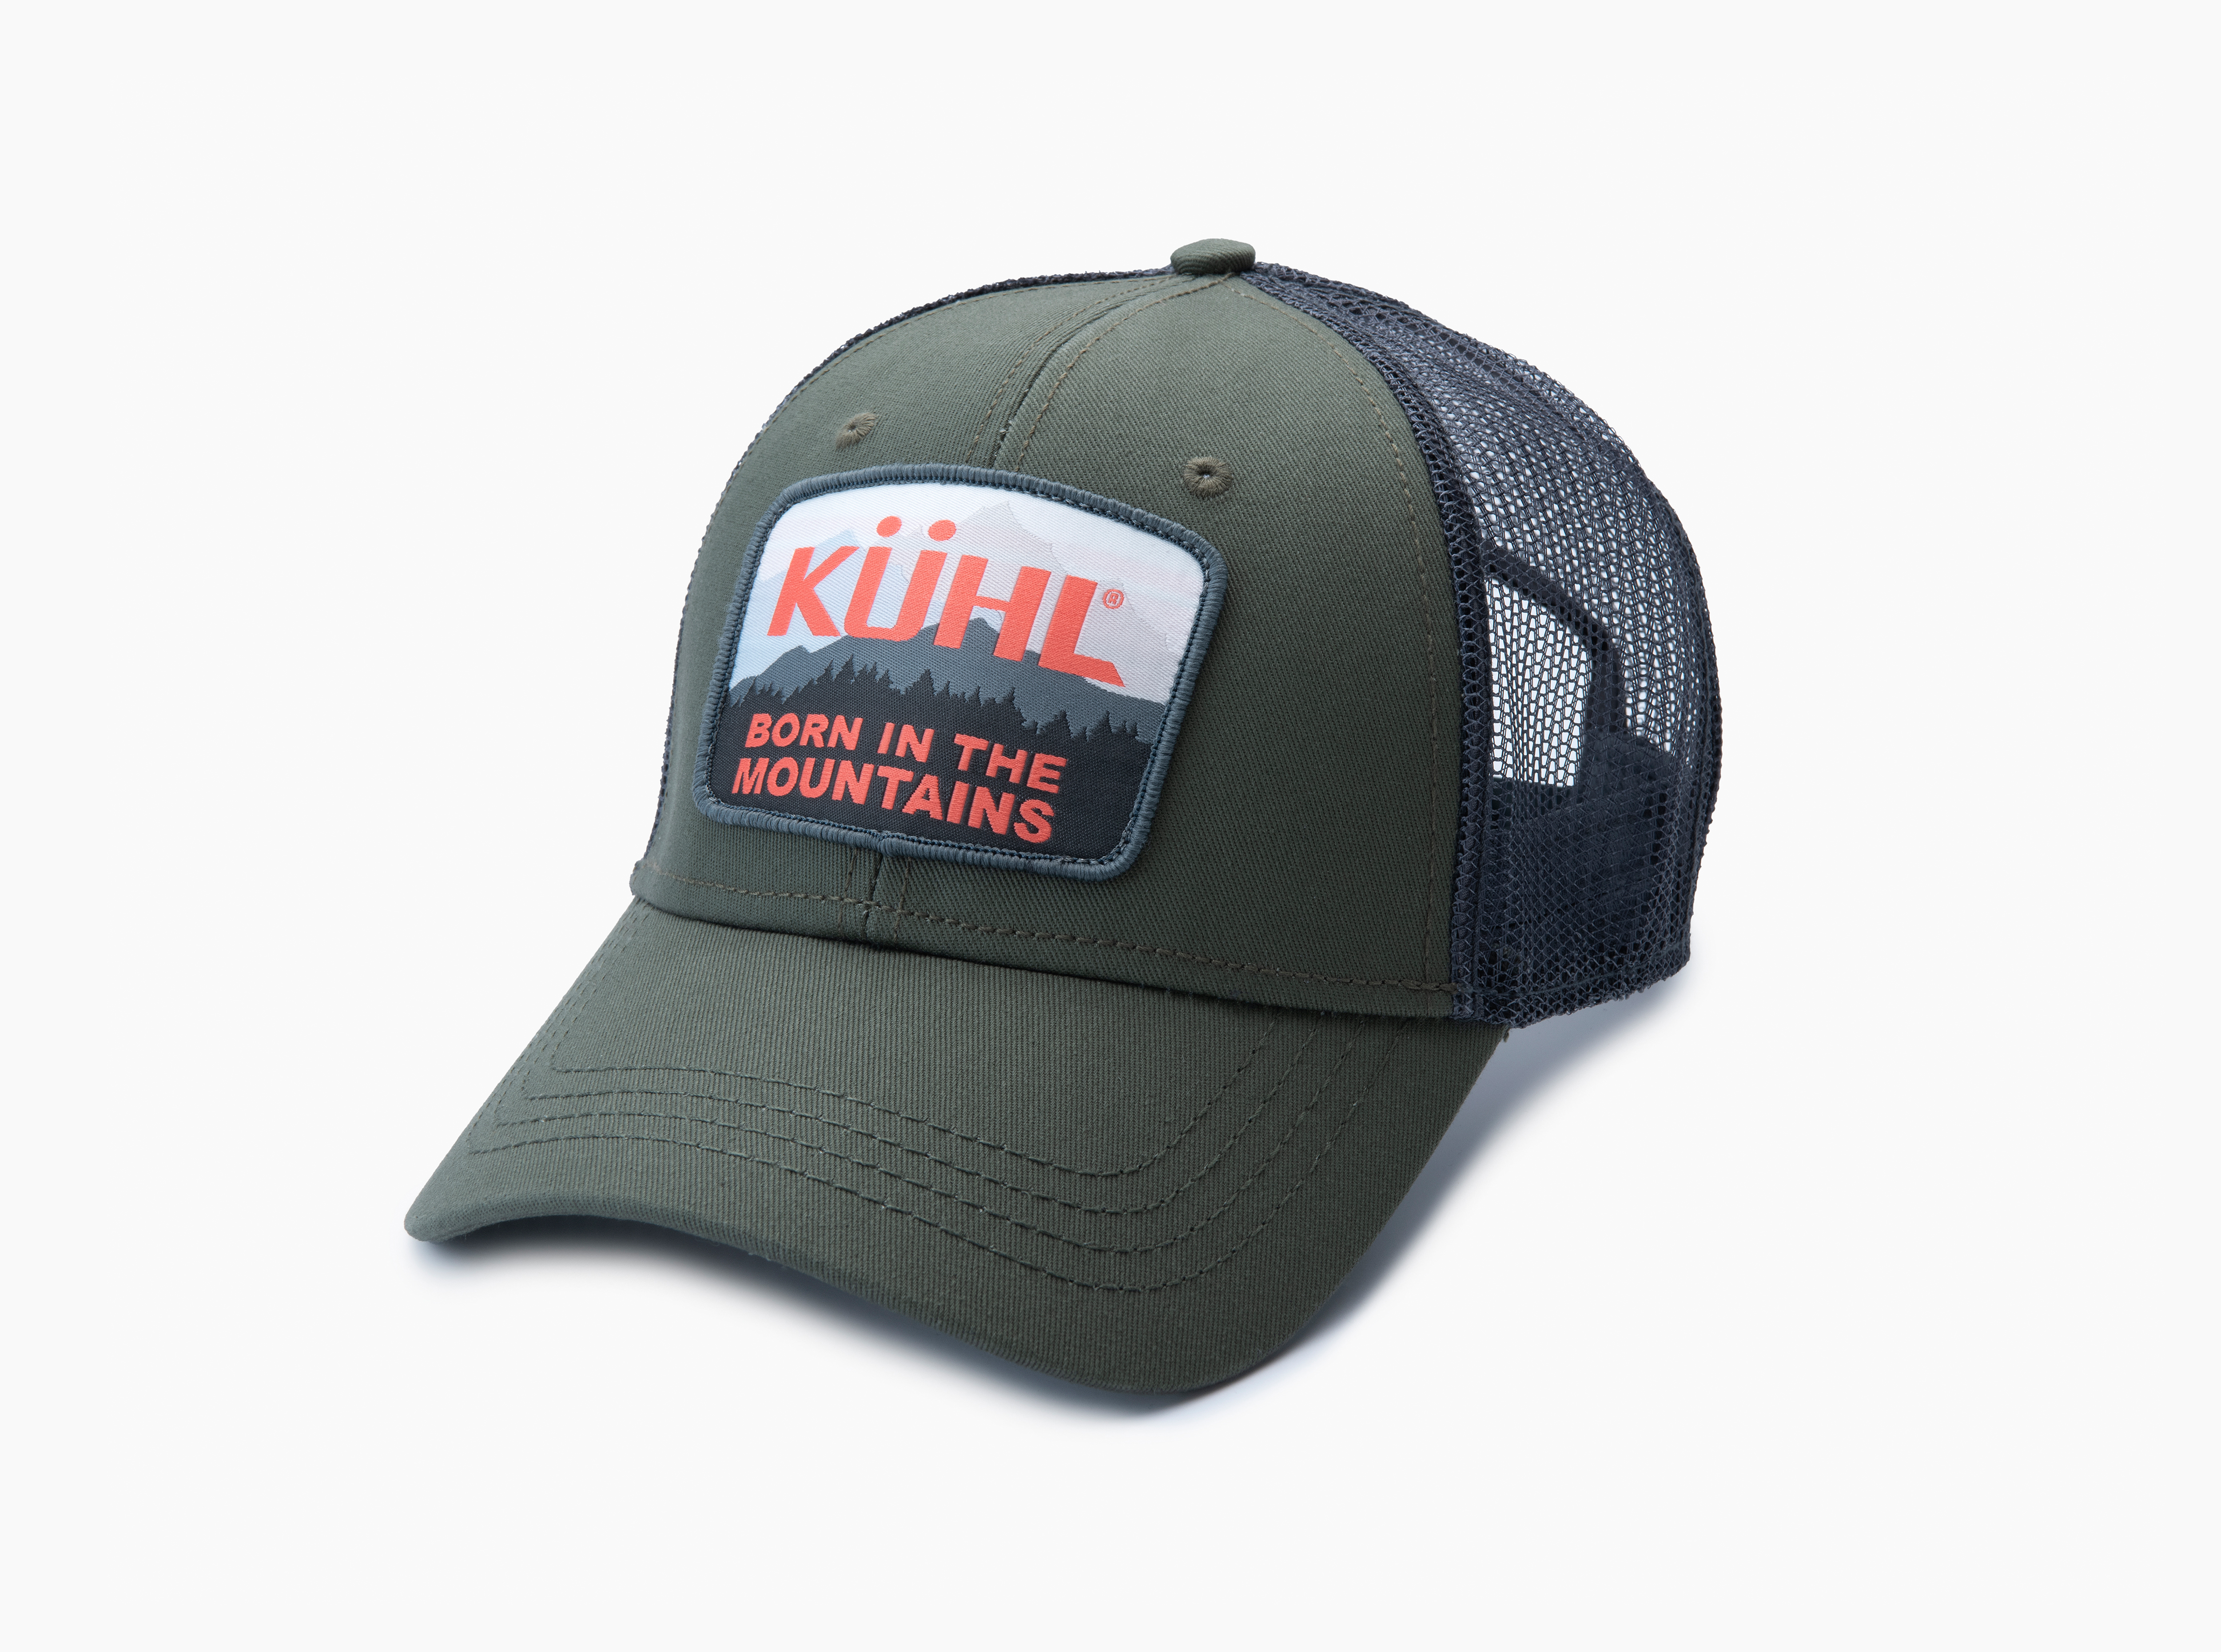 KUHL Freeflex Hat - Great Outdoor Shop